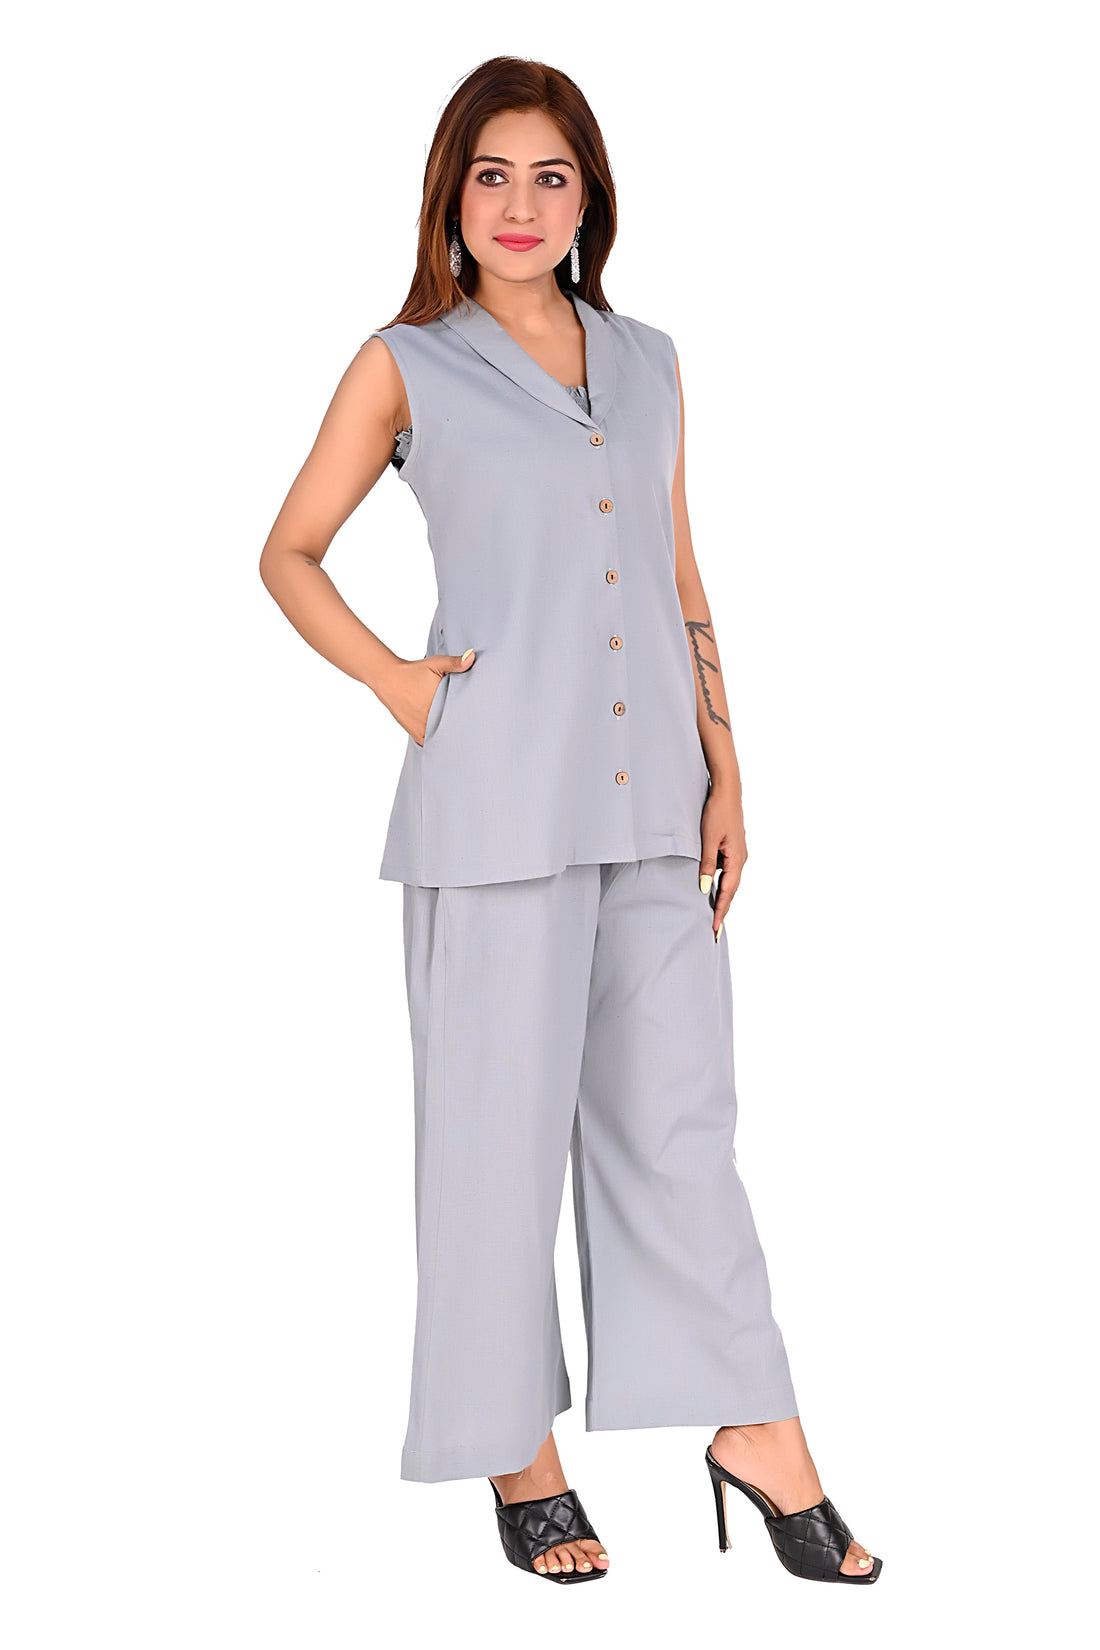 Nirmal online Premium cotton Co-ord set for Women in grey colour